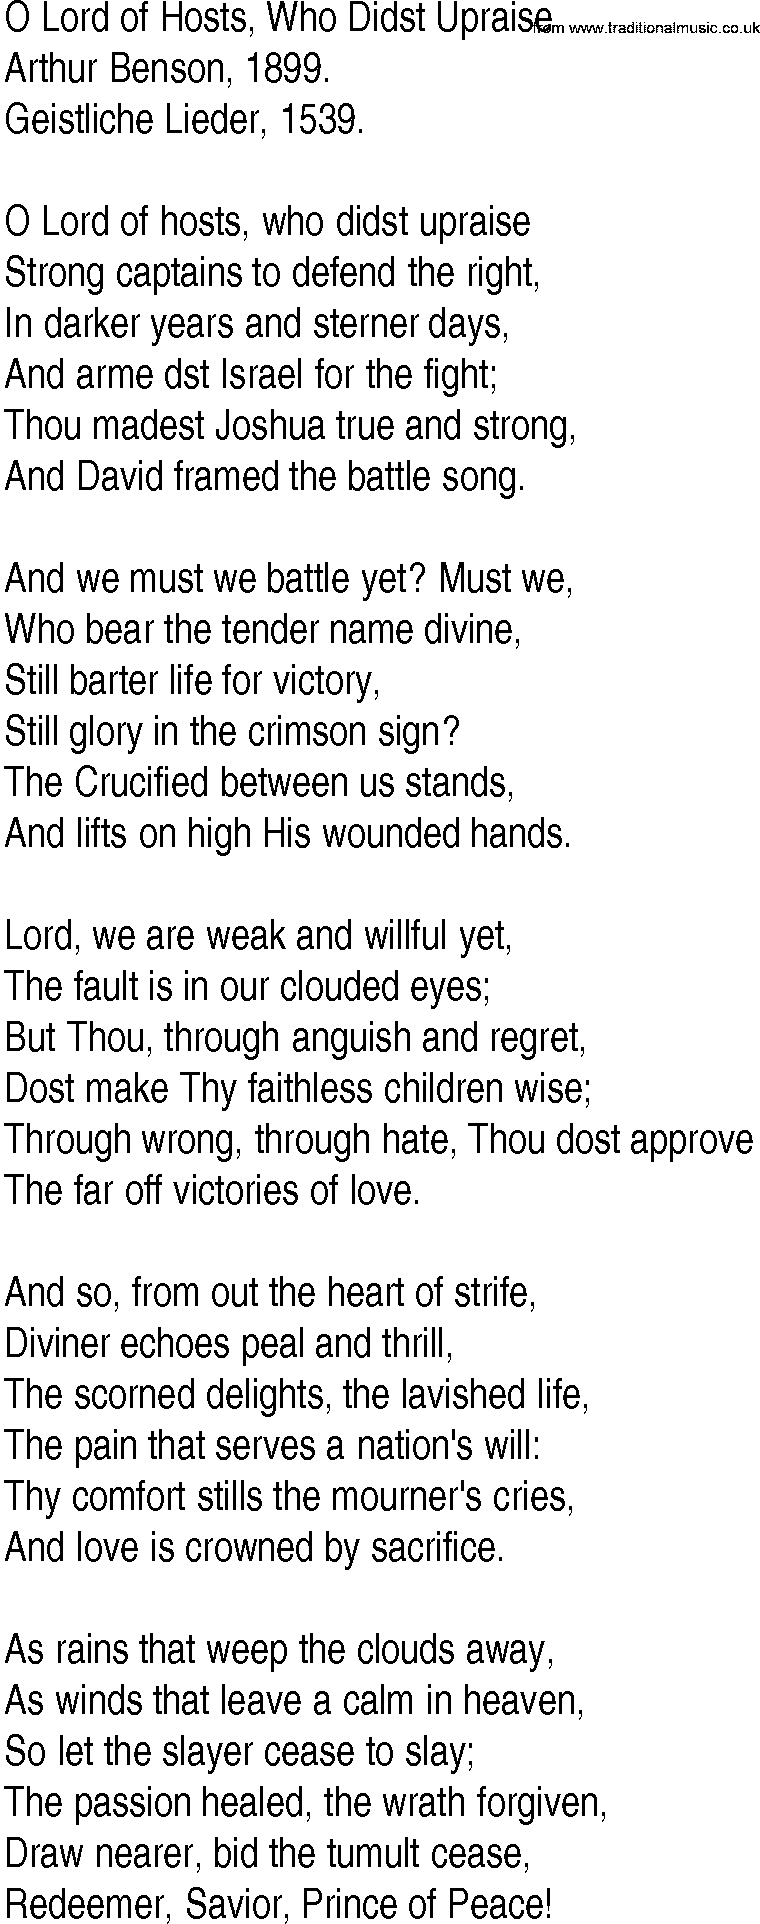 Hymn and Gospel Song: O Lord of Hosts, Who Didst Upraise by Arthur Benson lyrics